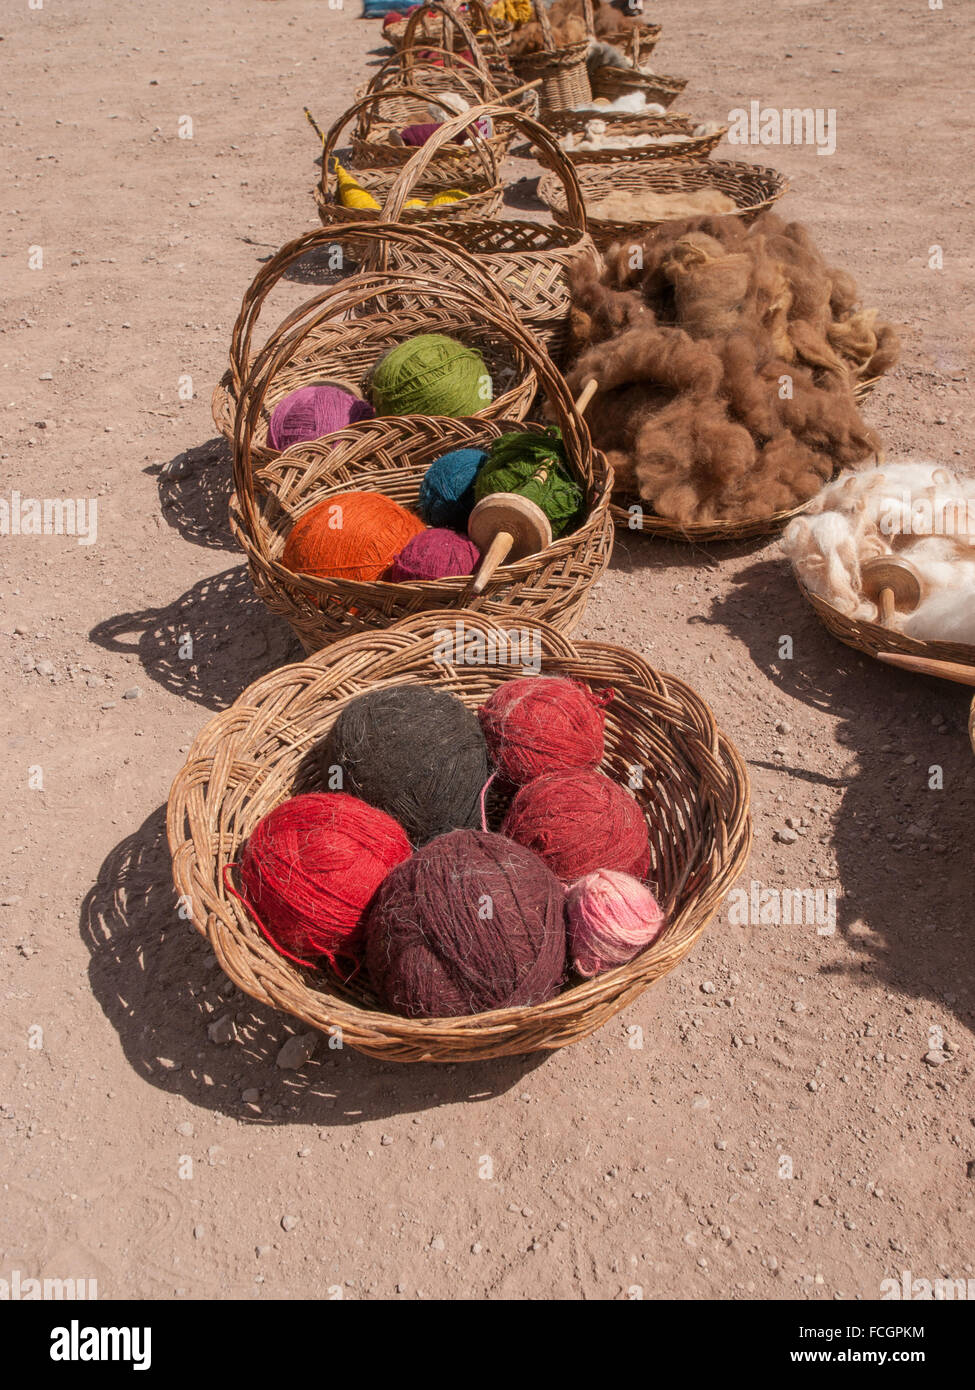 Alpaca dyed colourful yarn in baskets in Peru, South America. Stock Photo